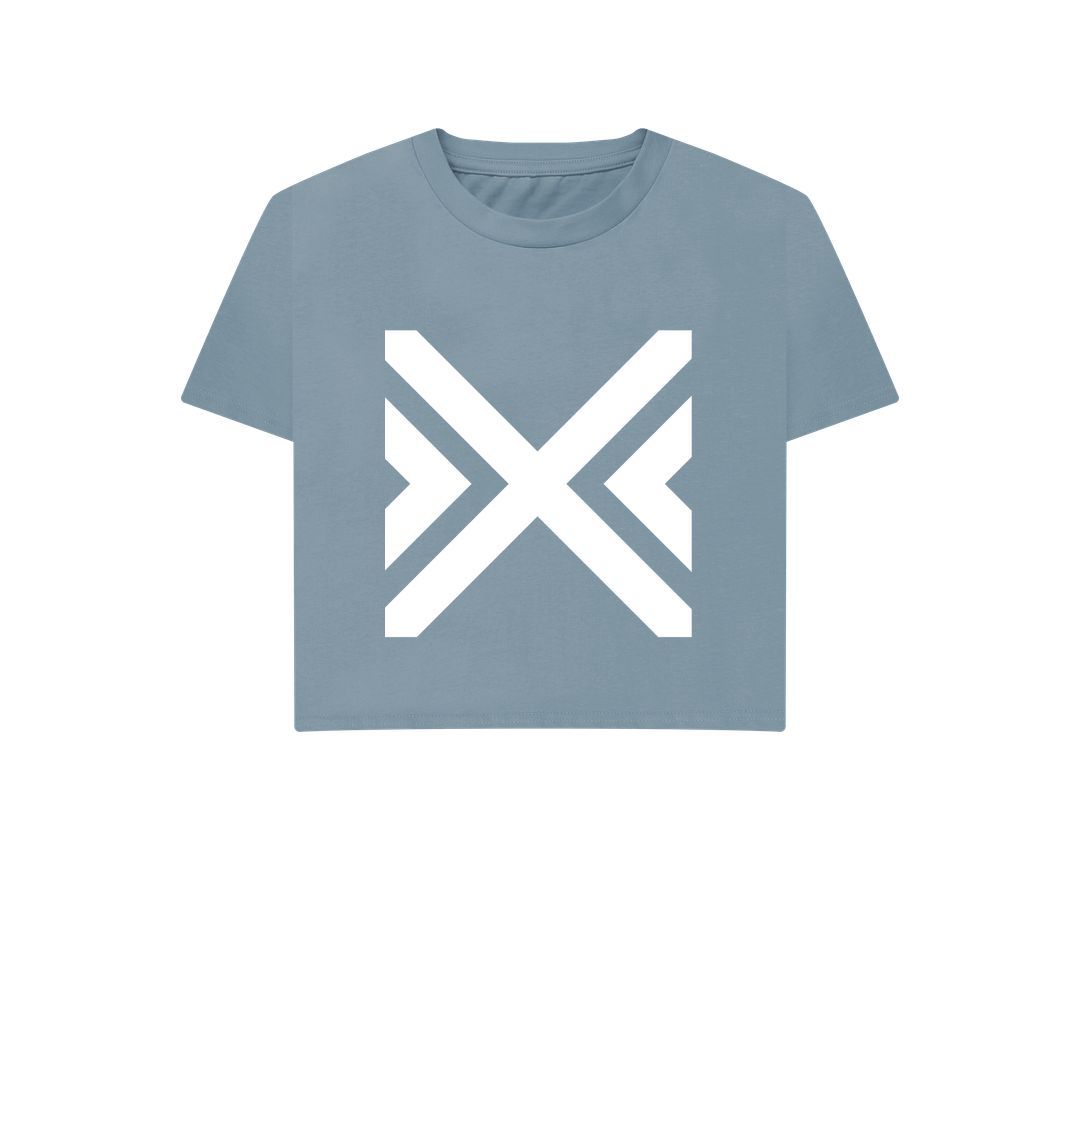 Stone Blue Cross T-shirts - Women's Boxy Tees